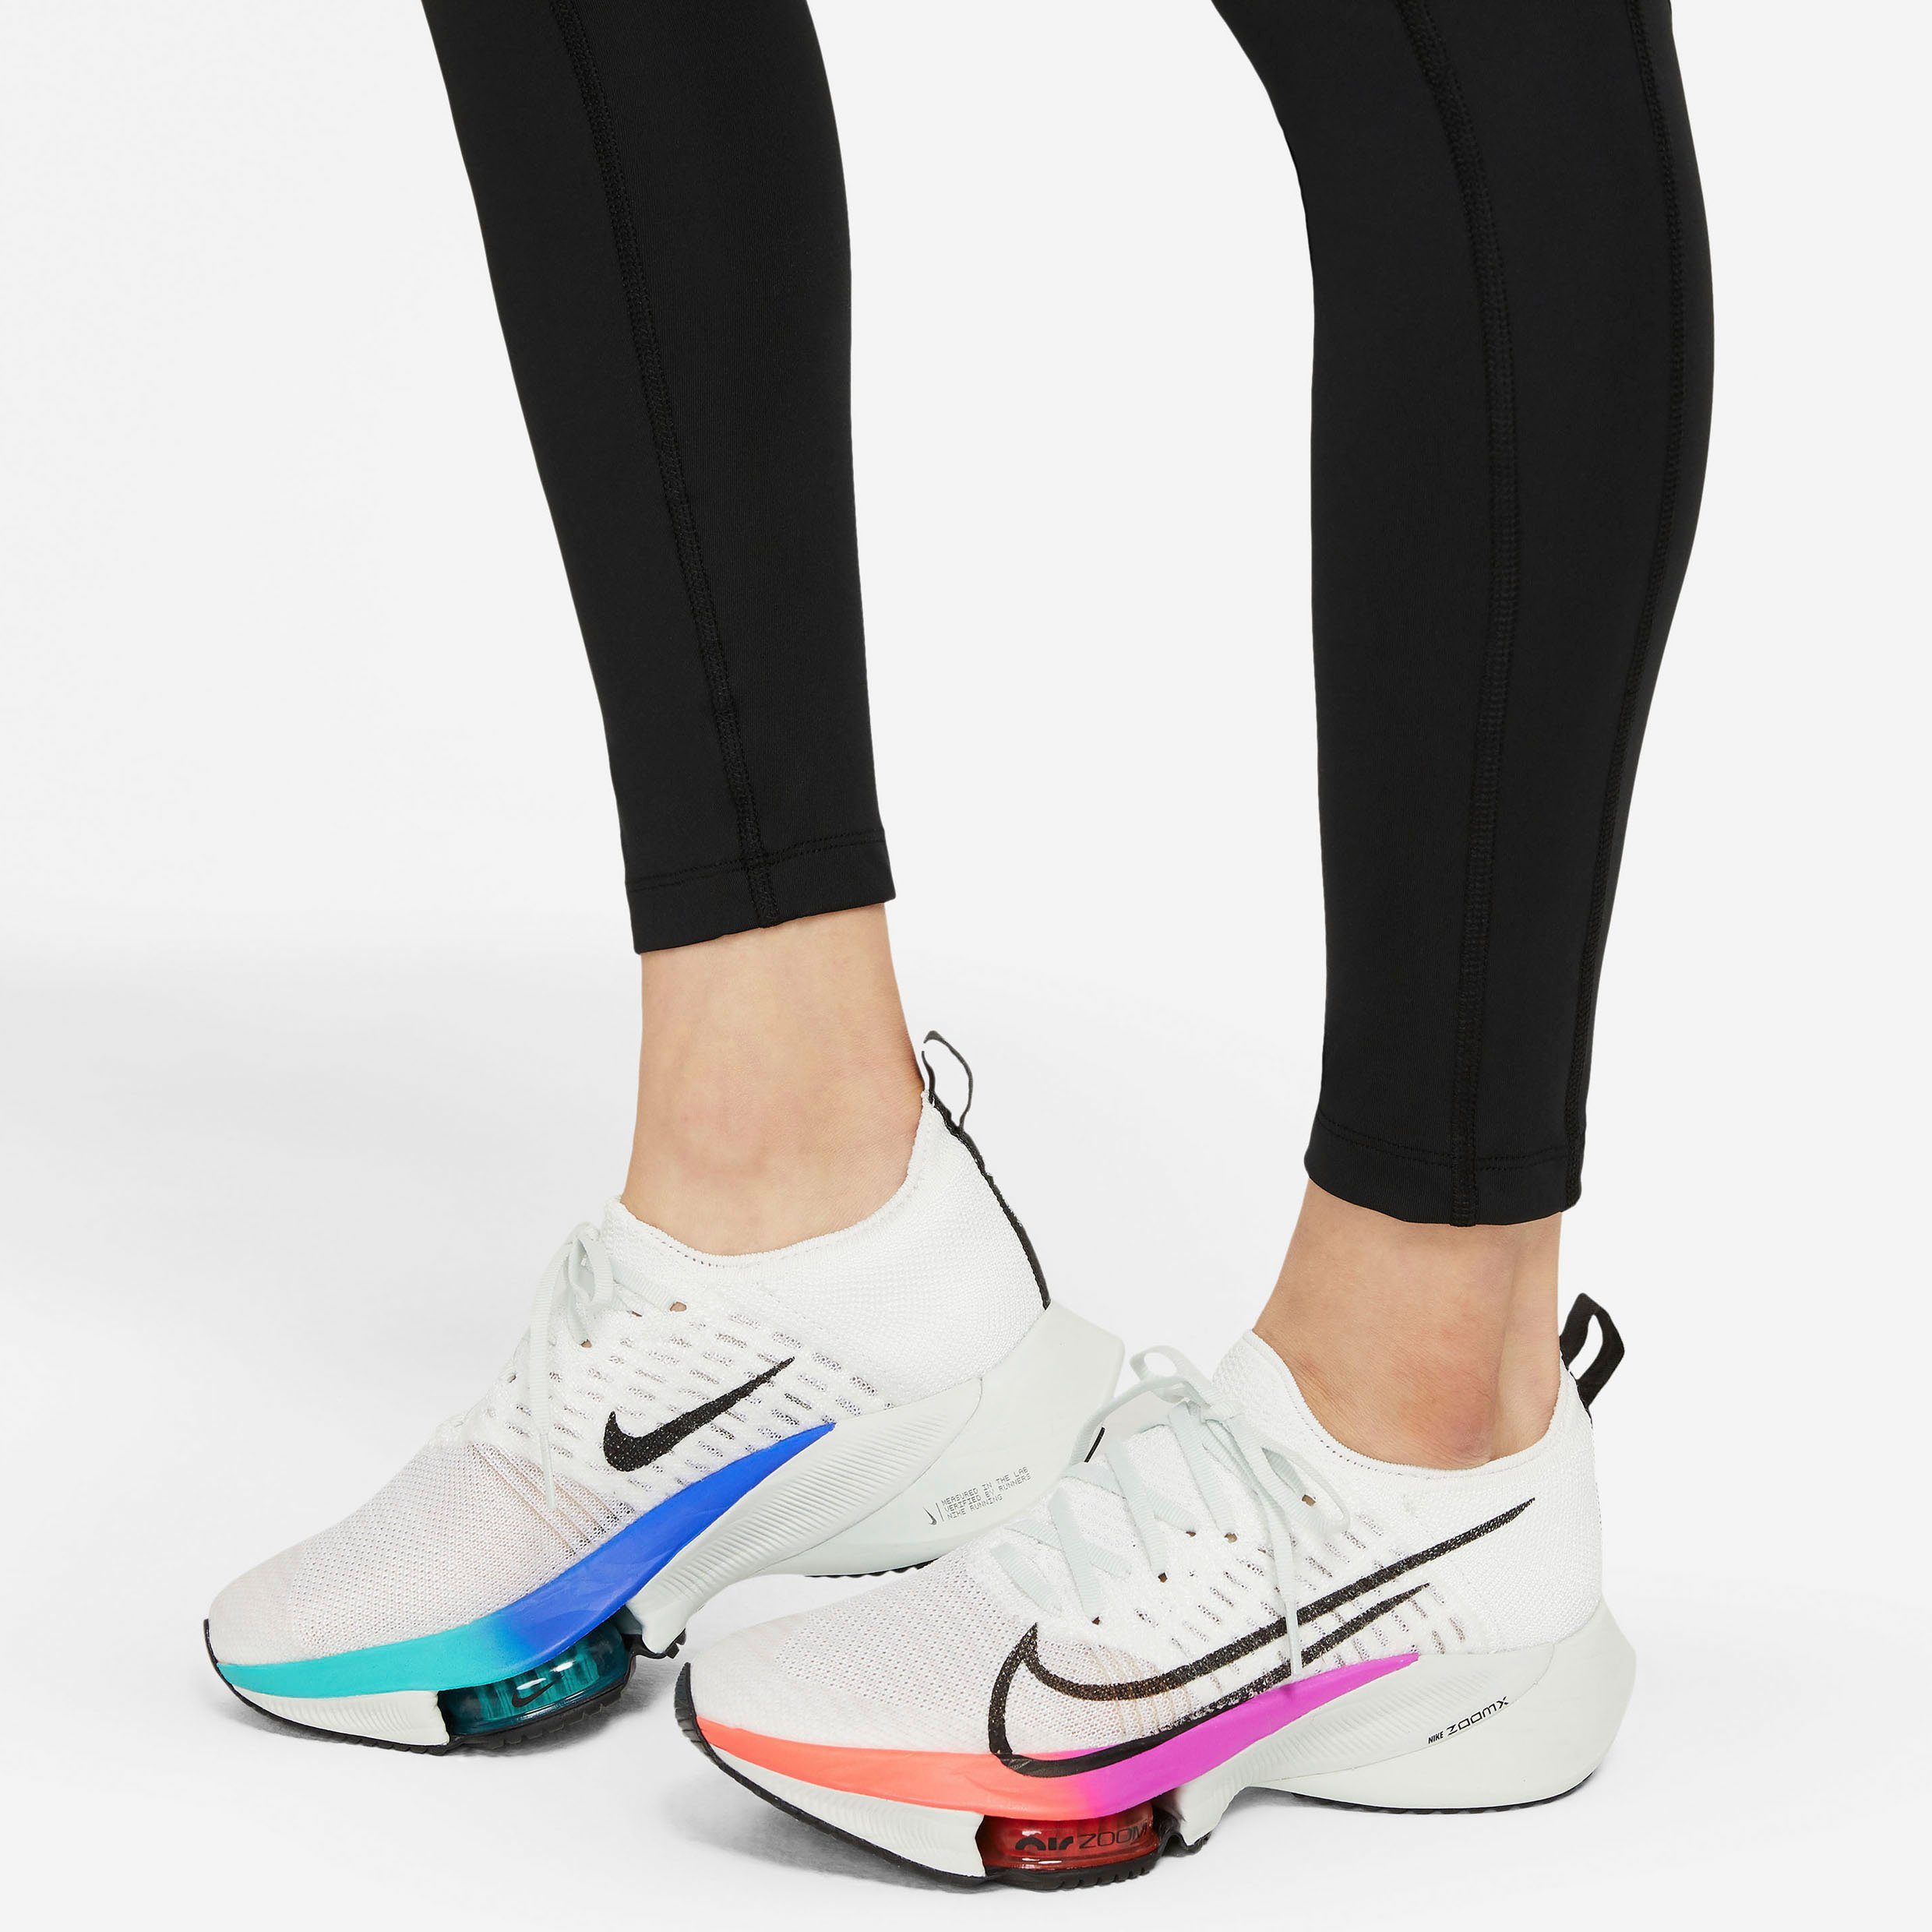 RUNNING WOMEN'S Nike LEGGINGS Lauftights FAST EPIC MID-RISE POCKET schwarz